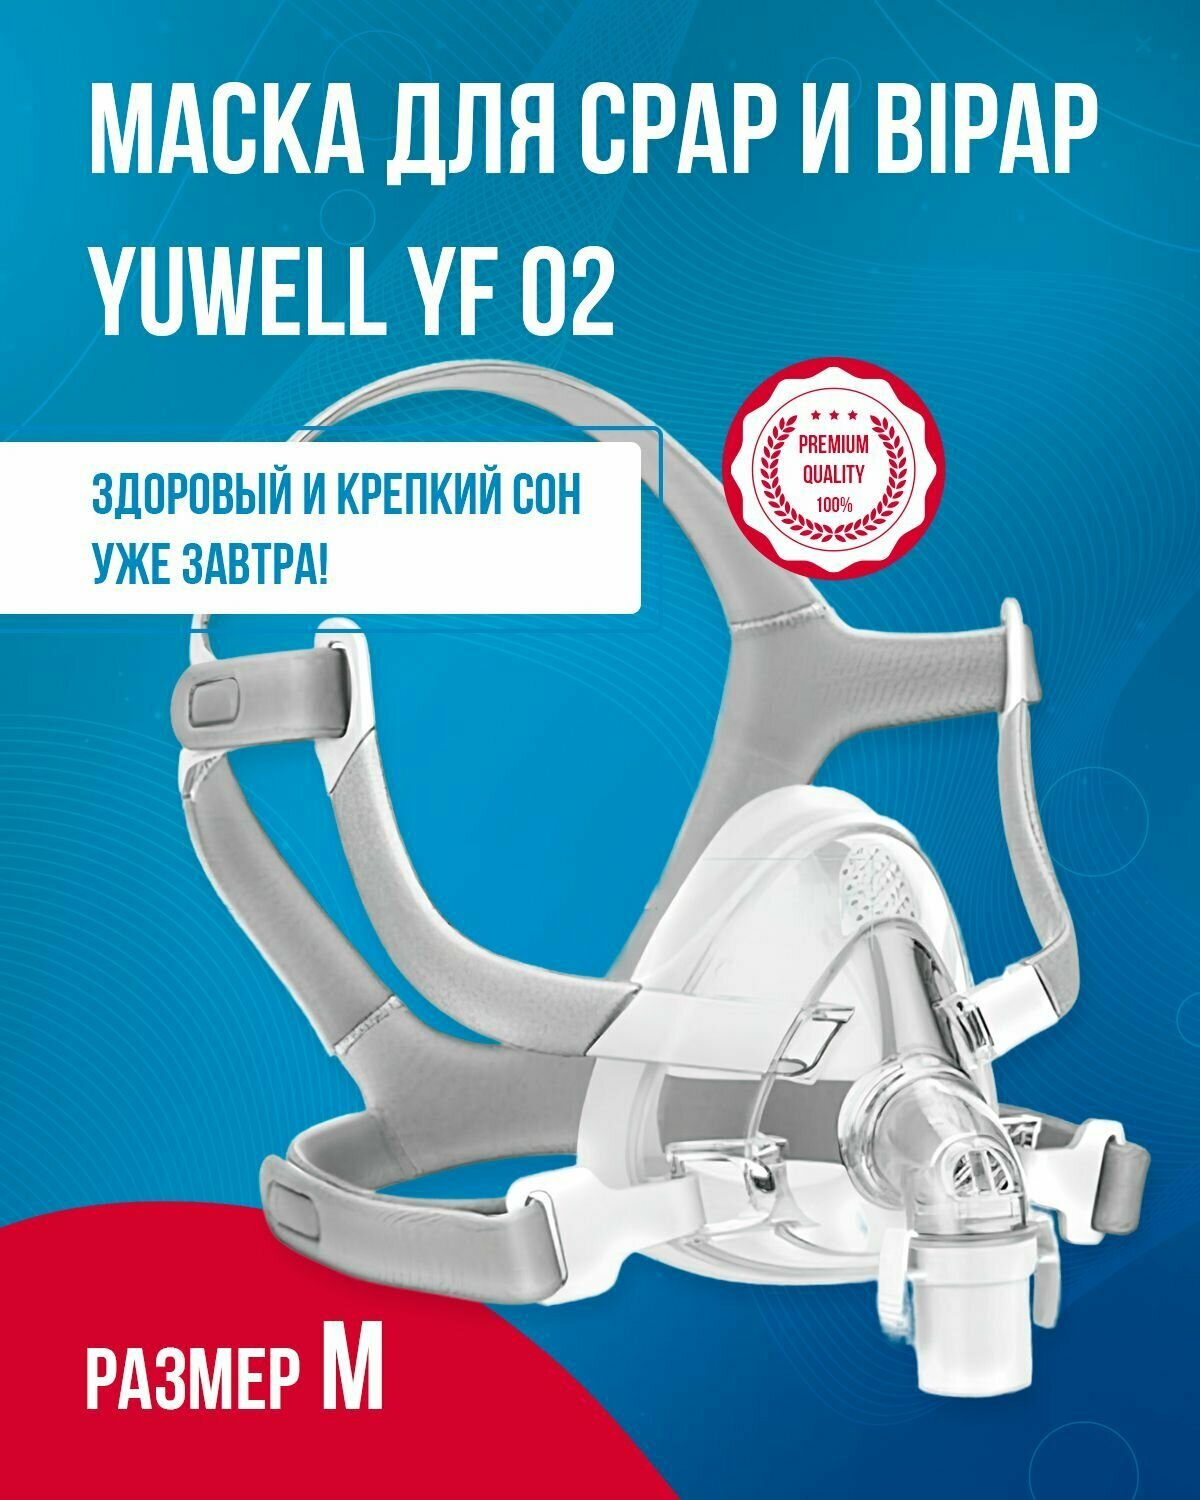 Маска Ротоносовая Yuwell YF 02 размер M, Yuwell для CPAP (СИПАП) и BiPAP (бипап)